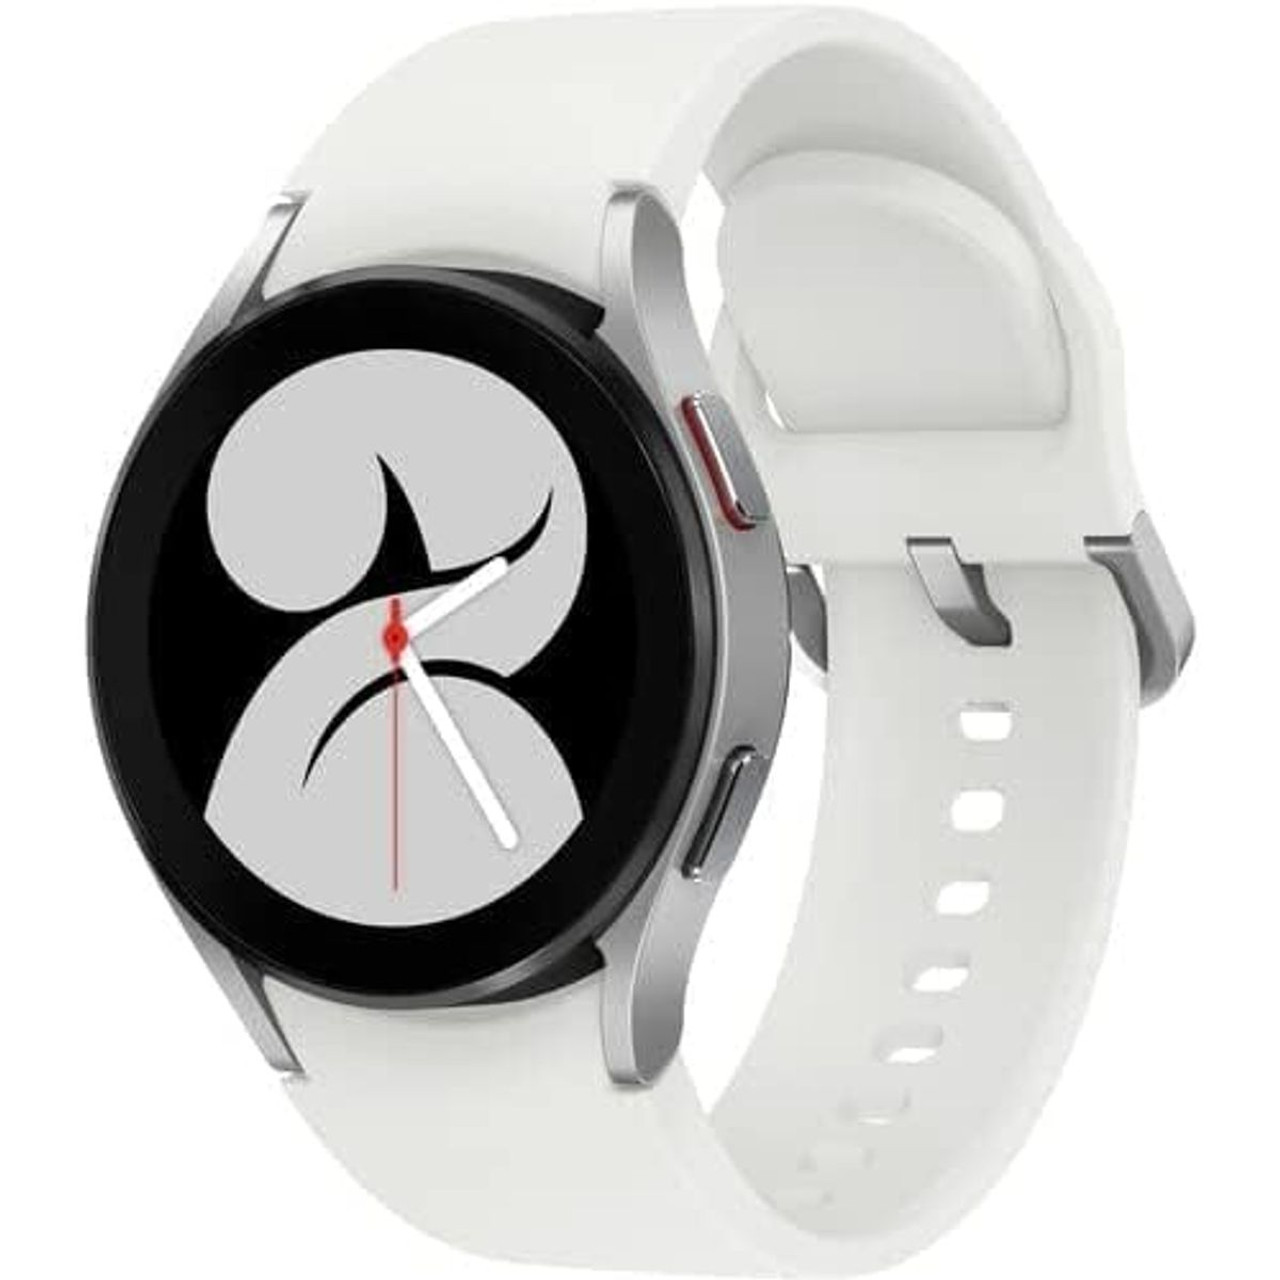 Samsung Galaxy Watch 5 product image